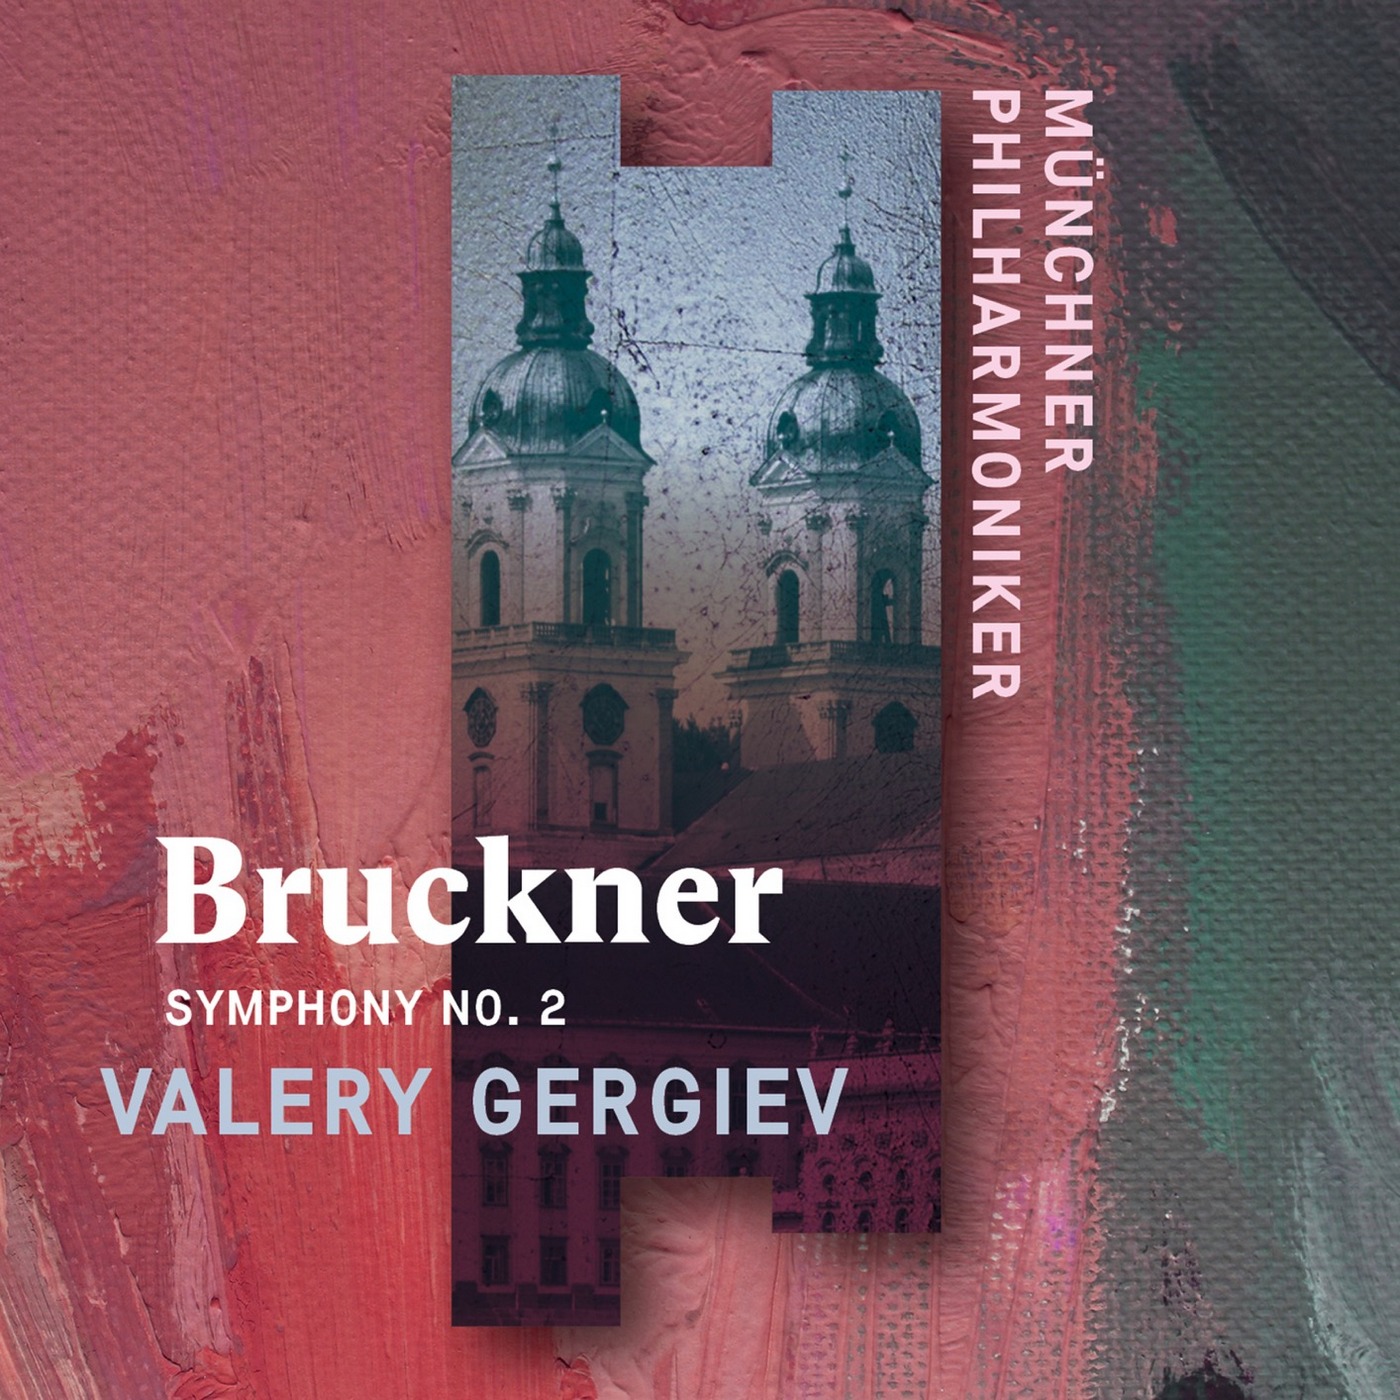 Munchner Philharmoniker & Valery Gergiev - Bruckner: Symphony No. 2 (Live) (2019) [FLAC 24bit/96kHz]